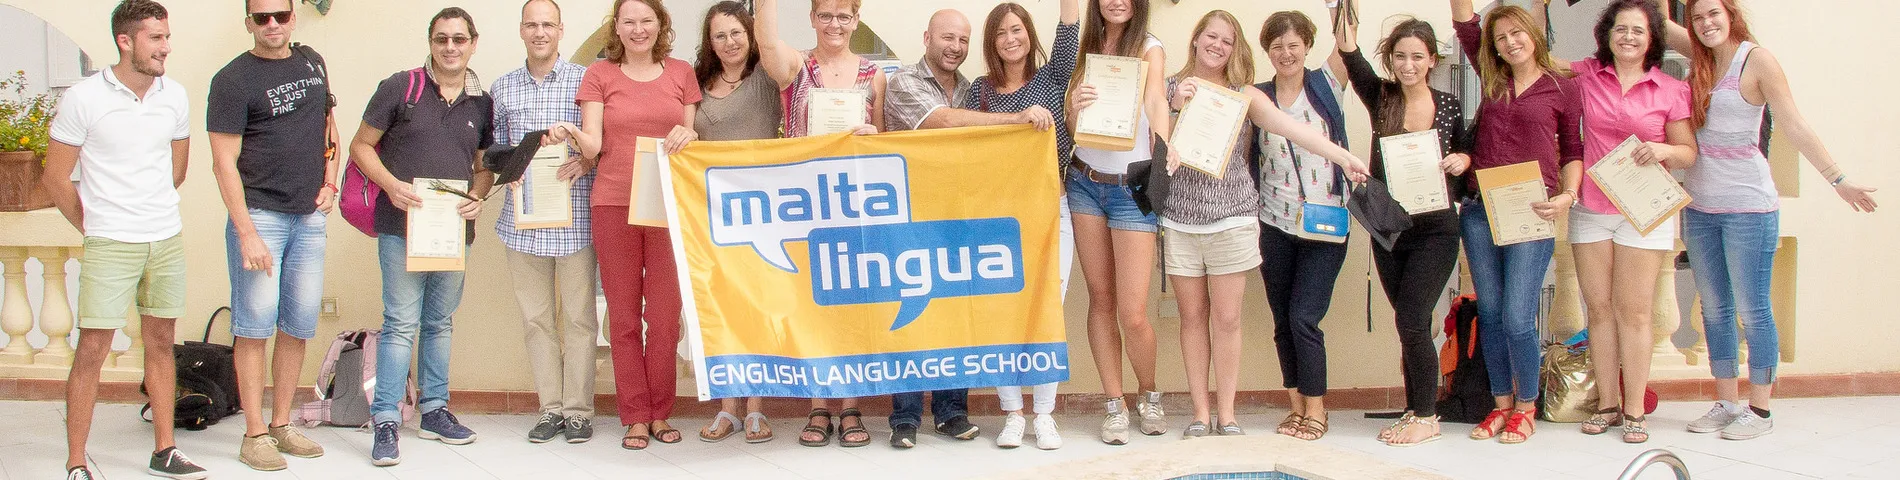 Maltalingua School of English immagine 1